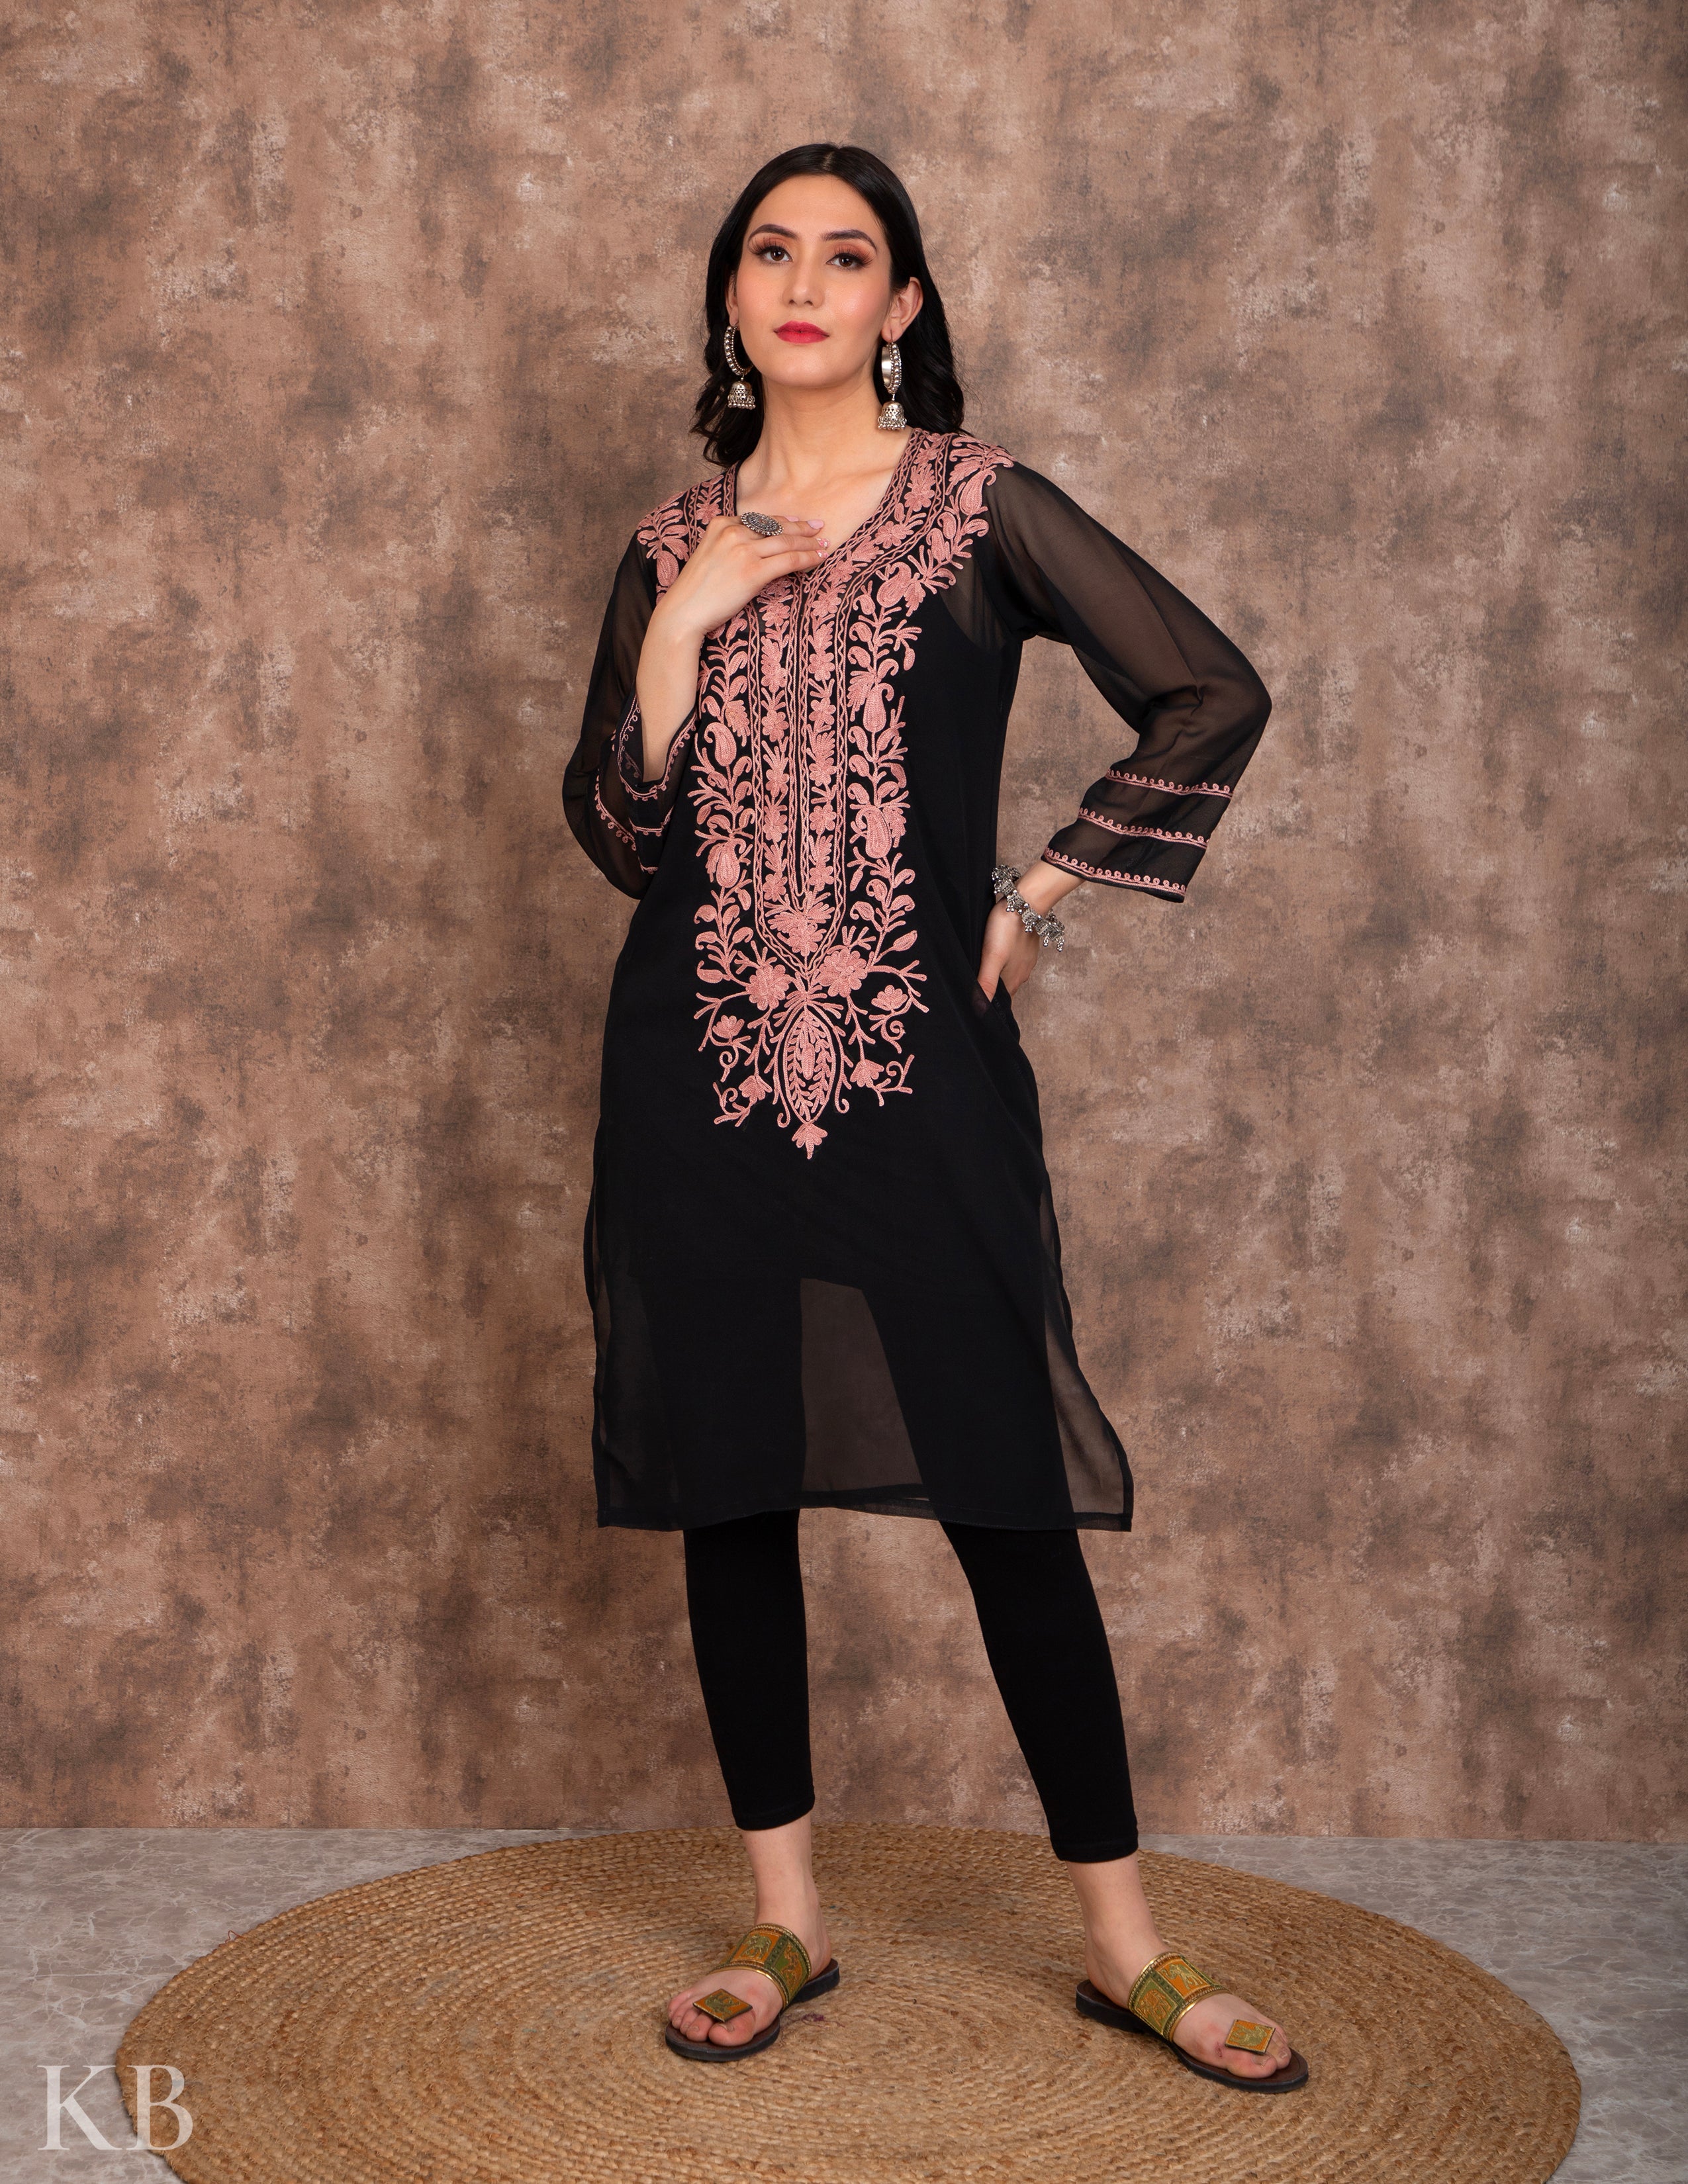 UU Kurti House - Now Shop #UU Designer Kurtis online on Amazon Shopping App  https://www.amazon.in/dp/B08CS1ZL21/ref=cm_sw_r_other_apa_i_-3ucFb0C7NYYQ  #UU UU Women's Khadi Cotton Olive Green Straight Kurti with Embroidery  #Ladies #Fashion #Clothingbrand ...